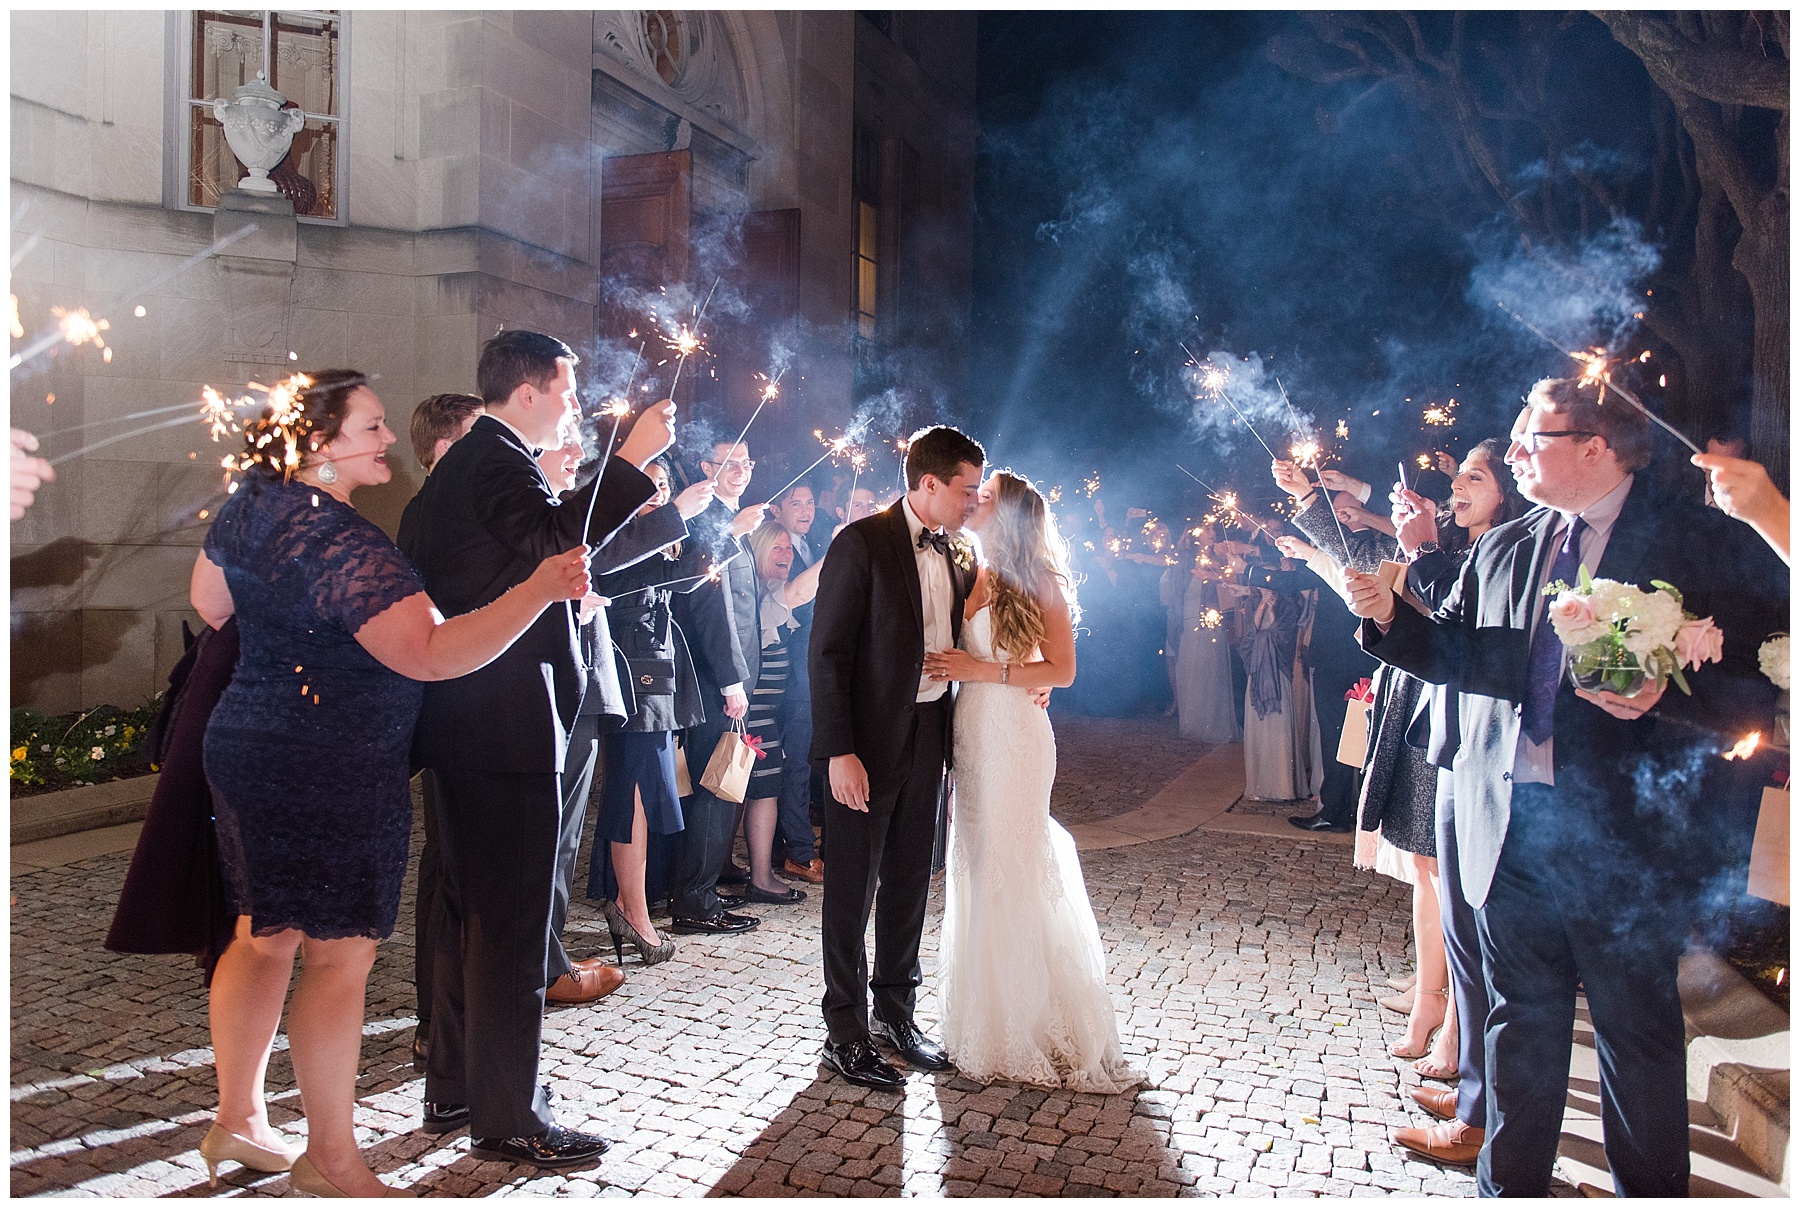 4-fun-wedding-send-off-ideas-sparklers-dc-wedding-photo